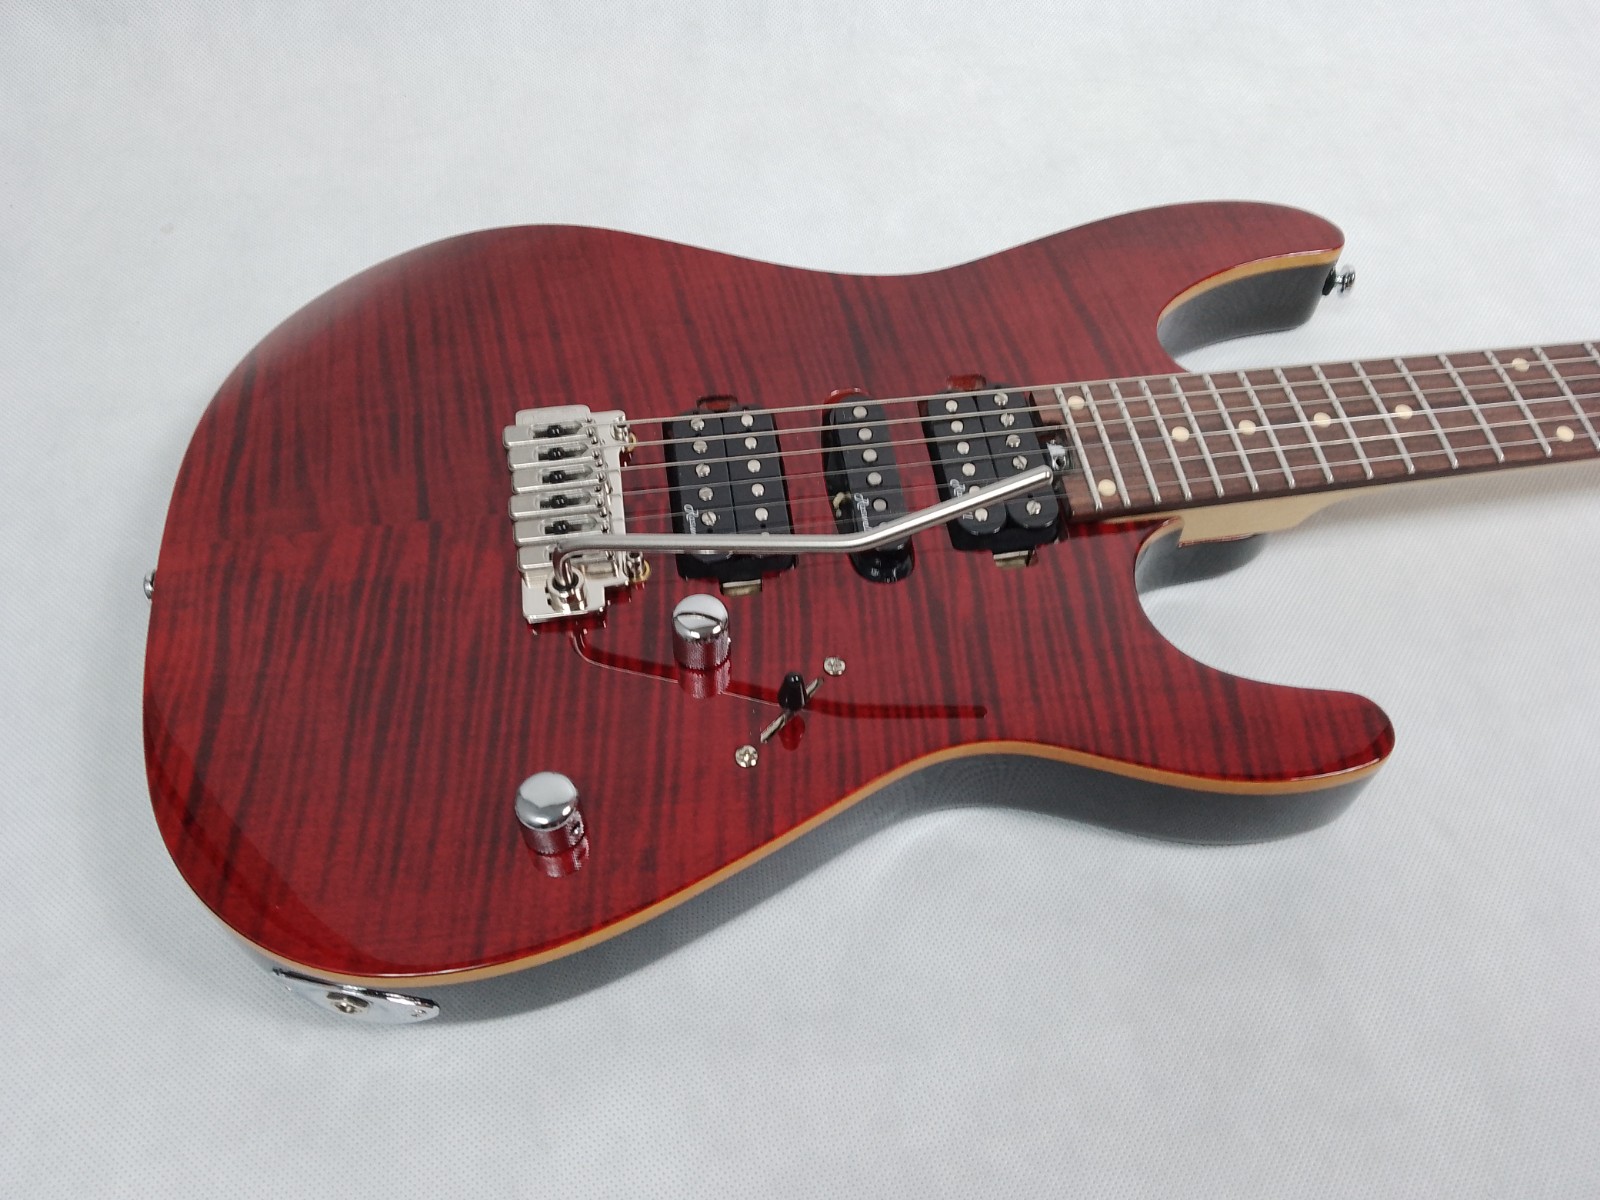 Harley Benton】Fusion-III HSH Roasted FNT 正規品 Guitar ギター ...